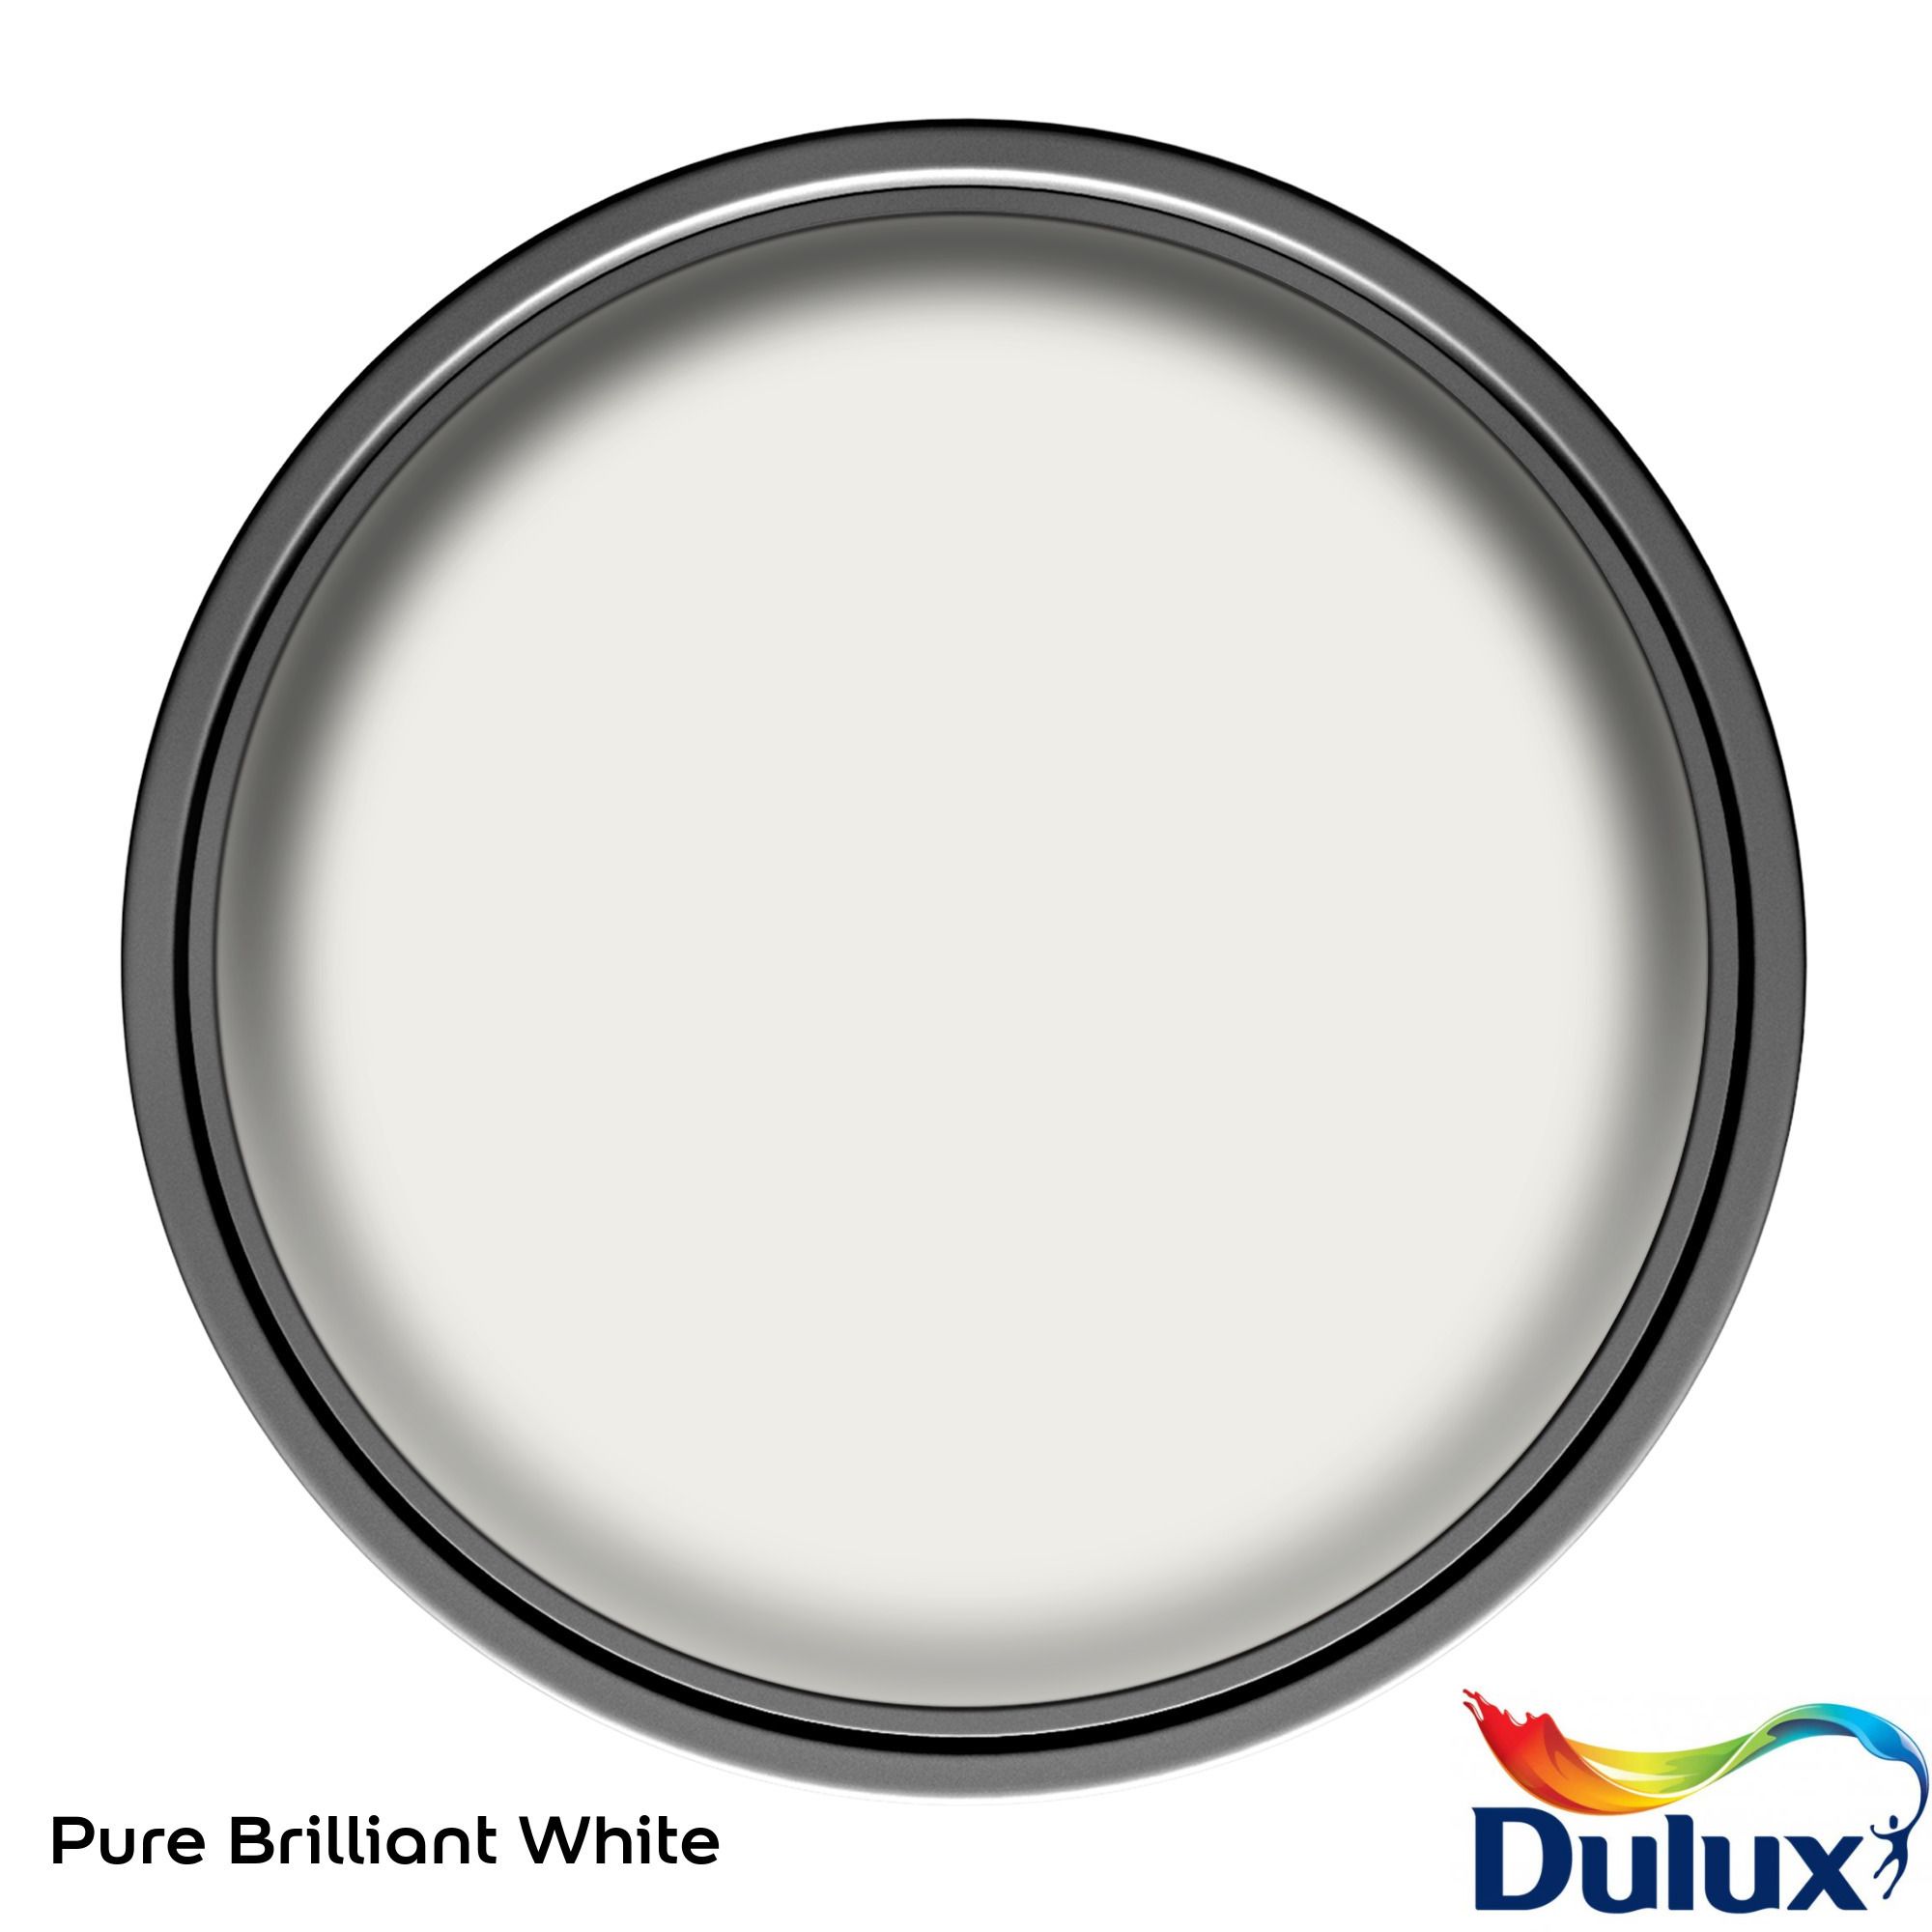 Dulux One Coat Pure Brilliant White Satinwood Metal & wood paint, 750ml